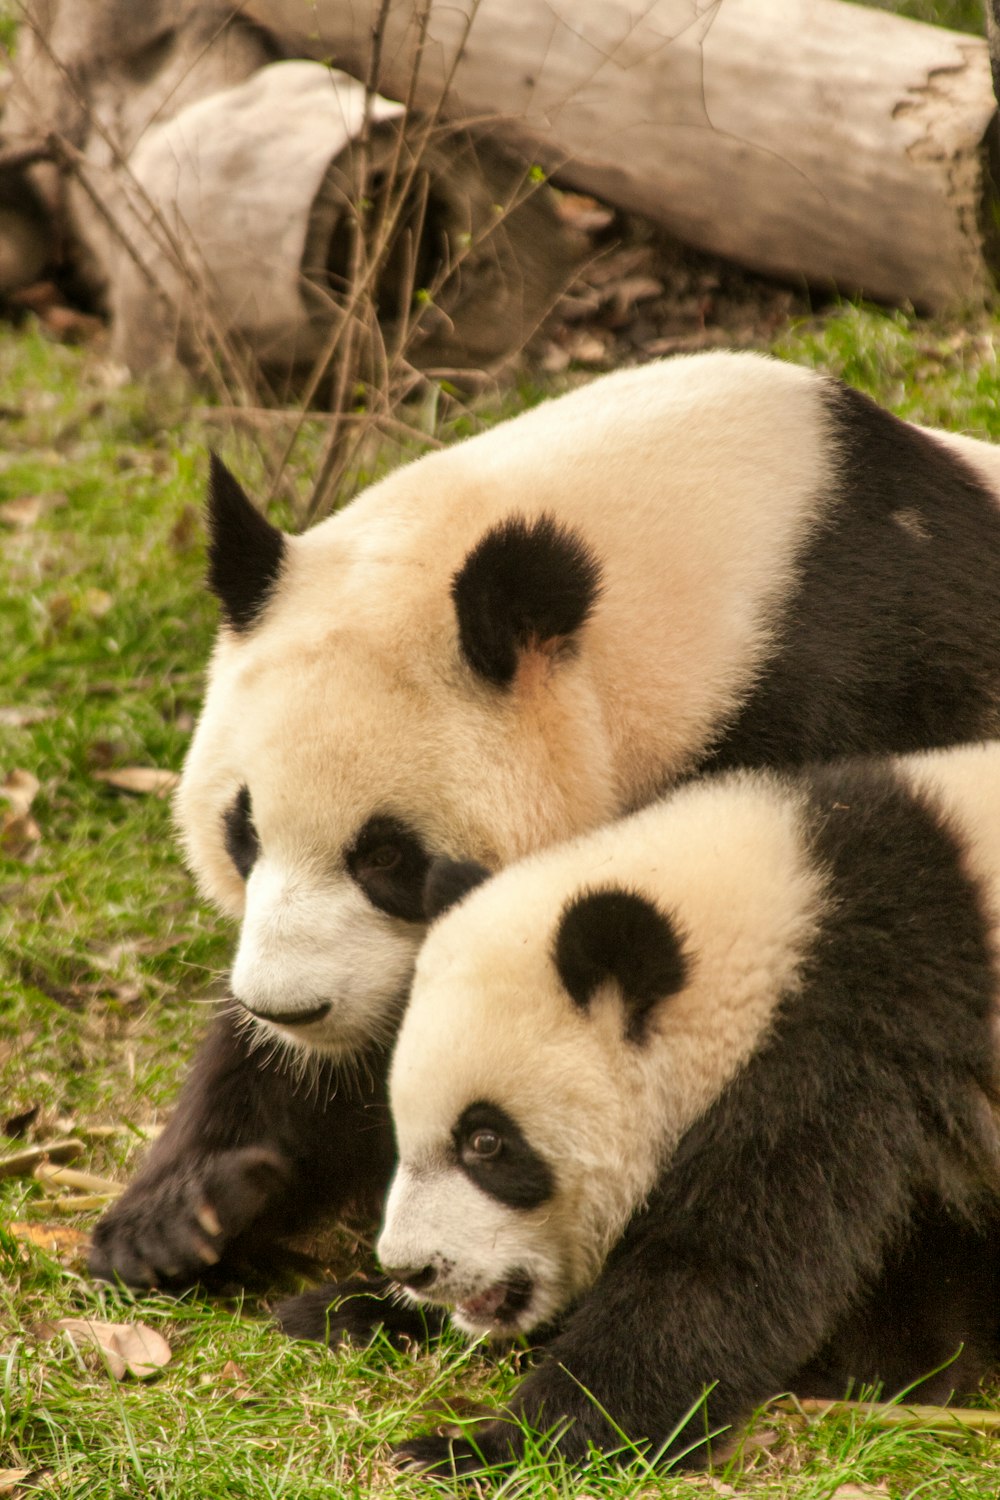 panda branco e preto na grama verde durante o dia